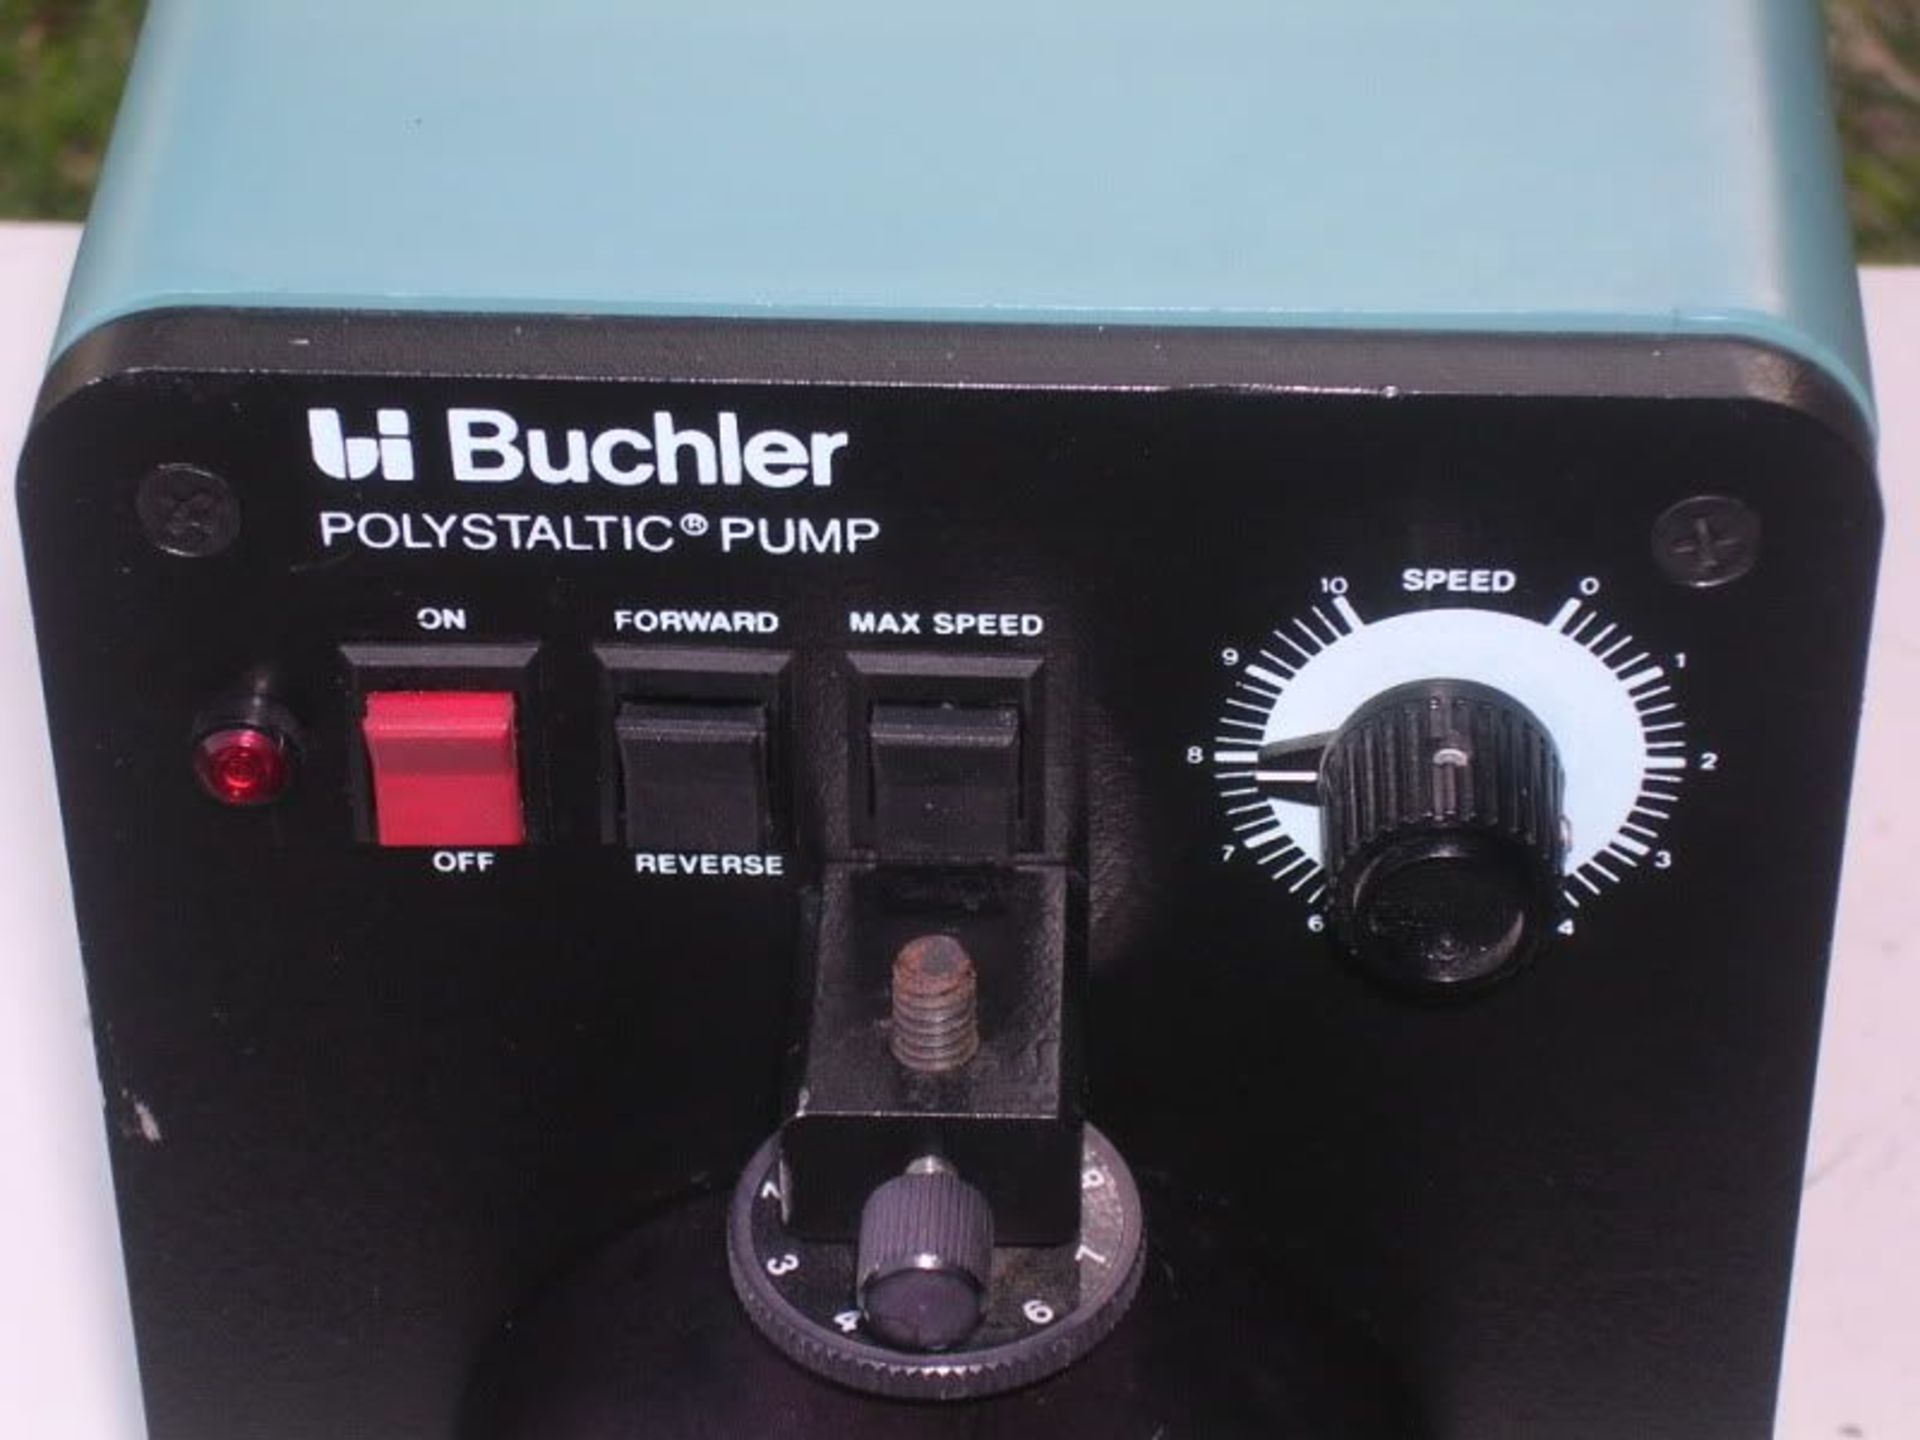 Haake Buchler Polystaltic Pump Model 426-1000 For / Rev, Qty 1, 222227663825 - Image 6 of 12